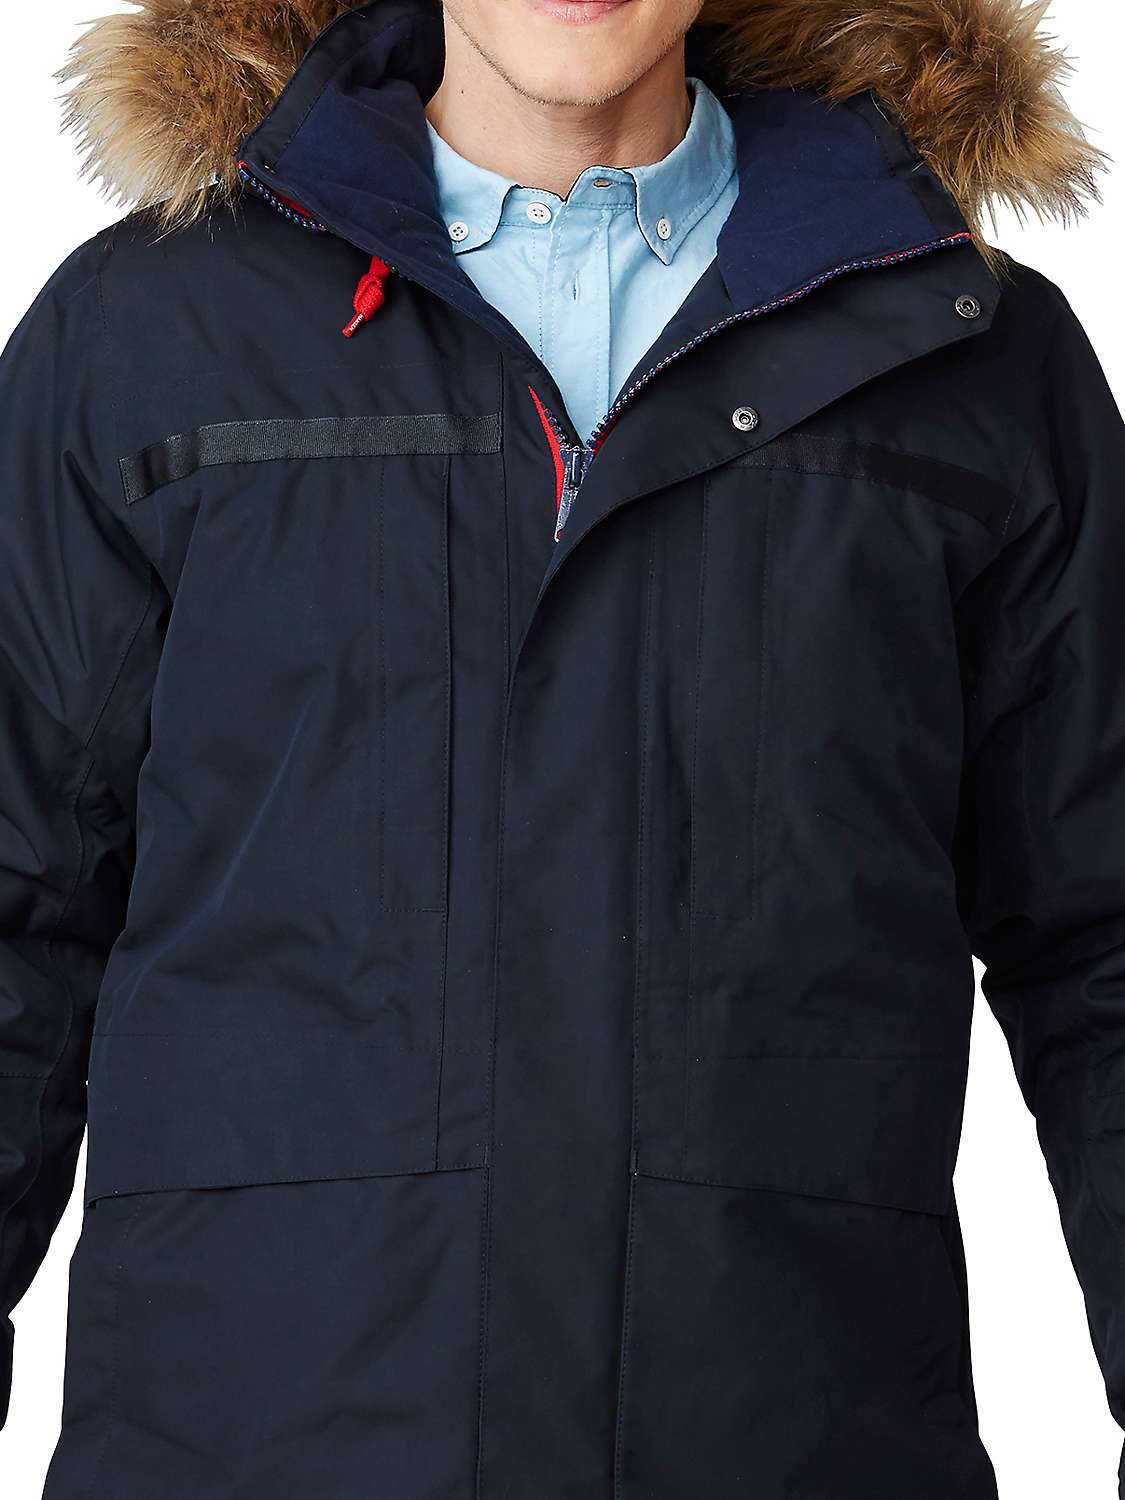 Buy Helly Hansen Coastal 2 Waterproof Men's Parka Jacket, Navy Online at johnlewis.com